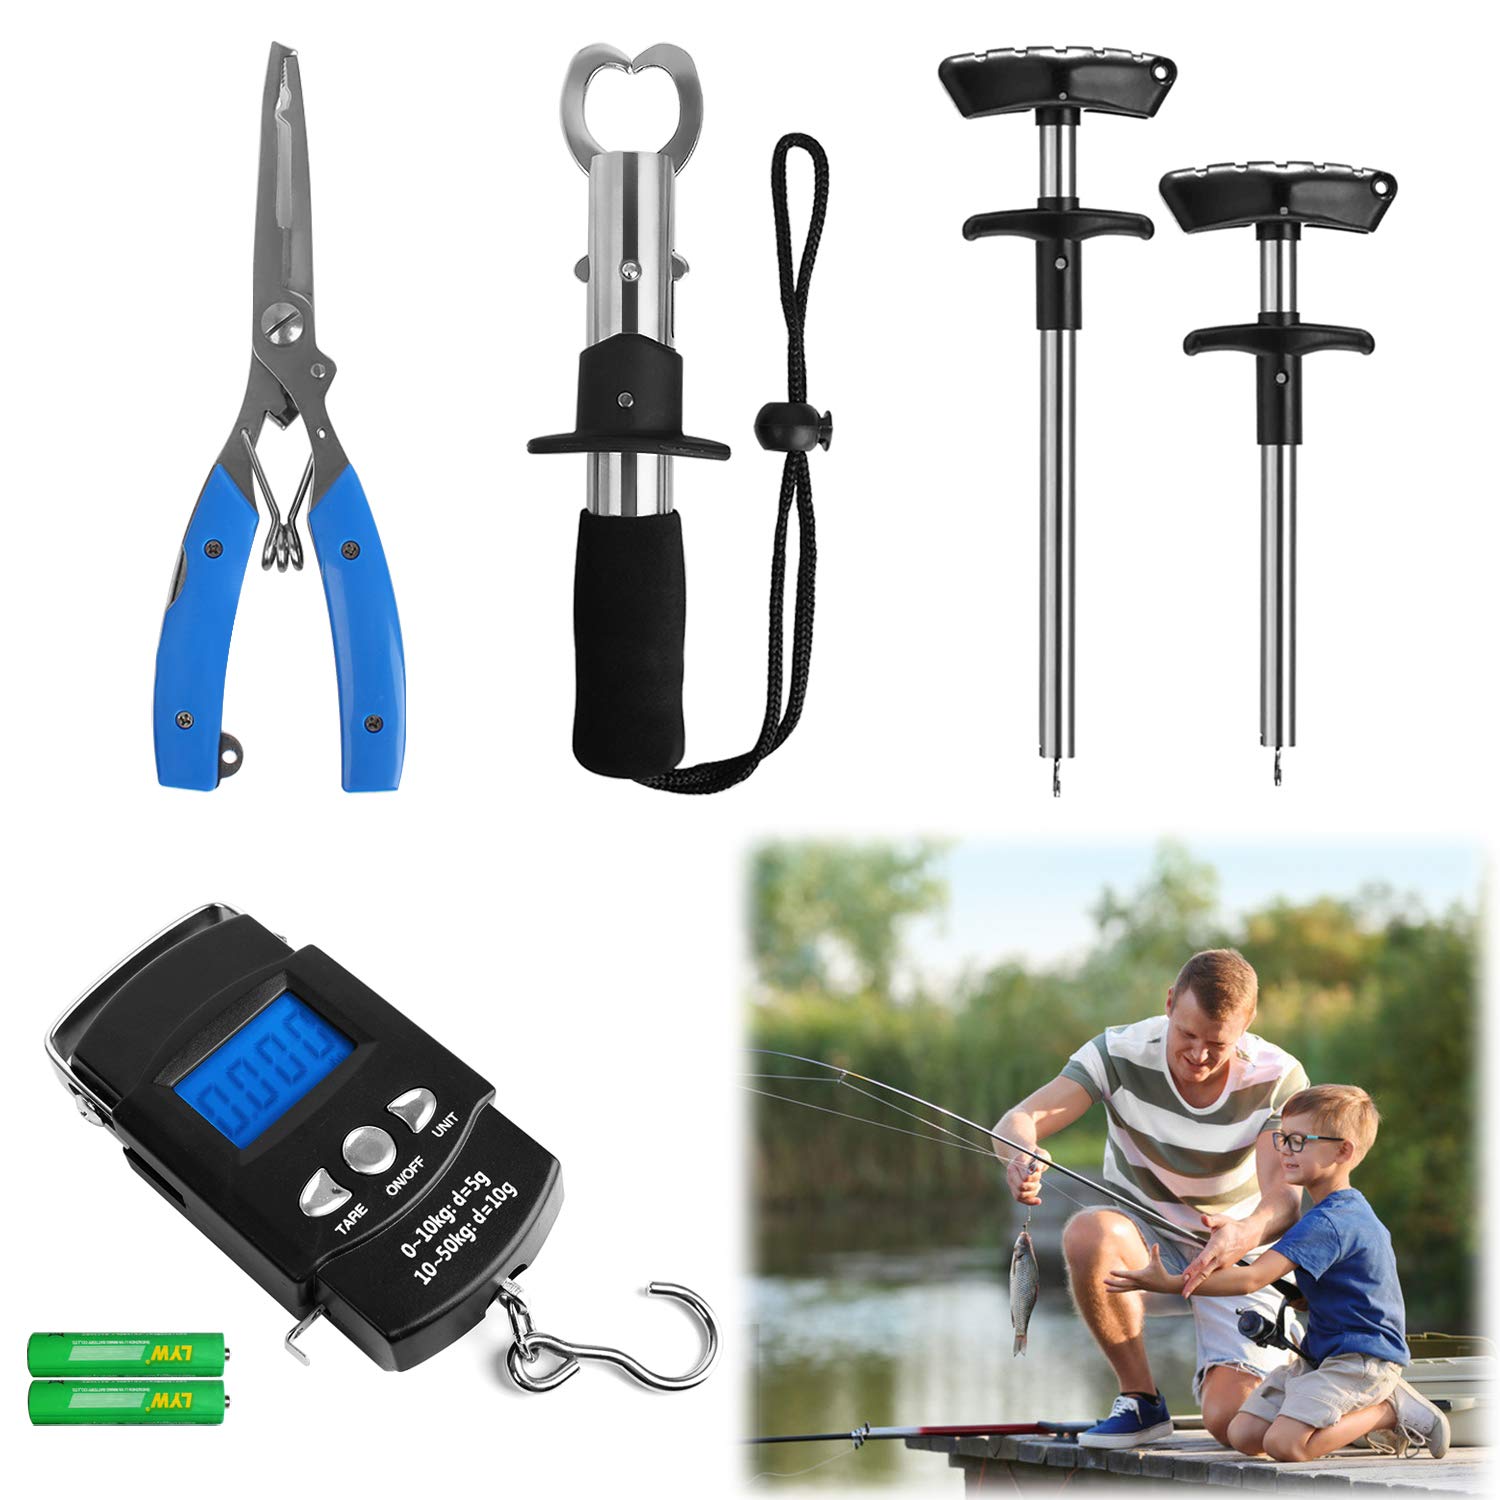 AIRKOUL 5pcs Fishing Tool Kit, Includes Fishing Pliers, Fish Hook